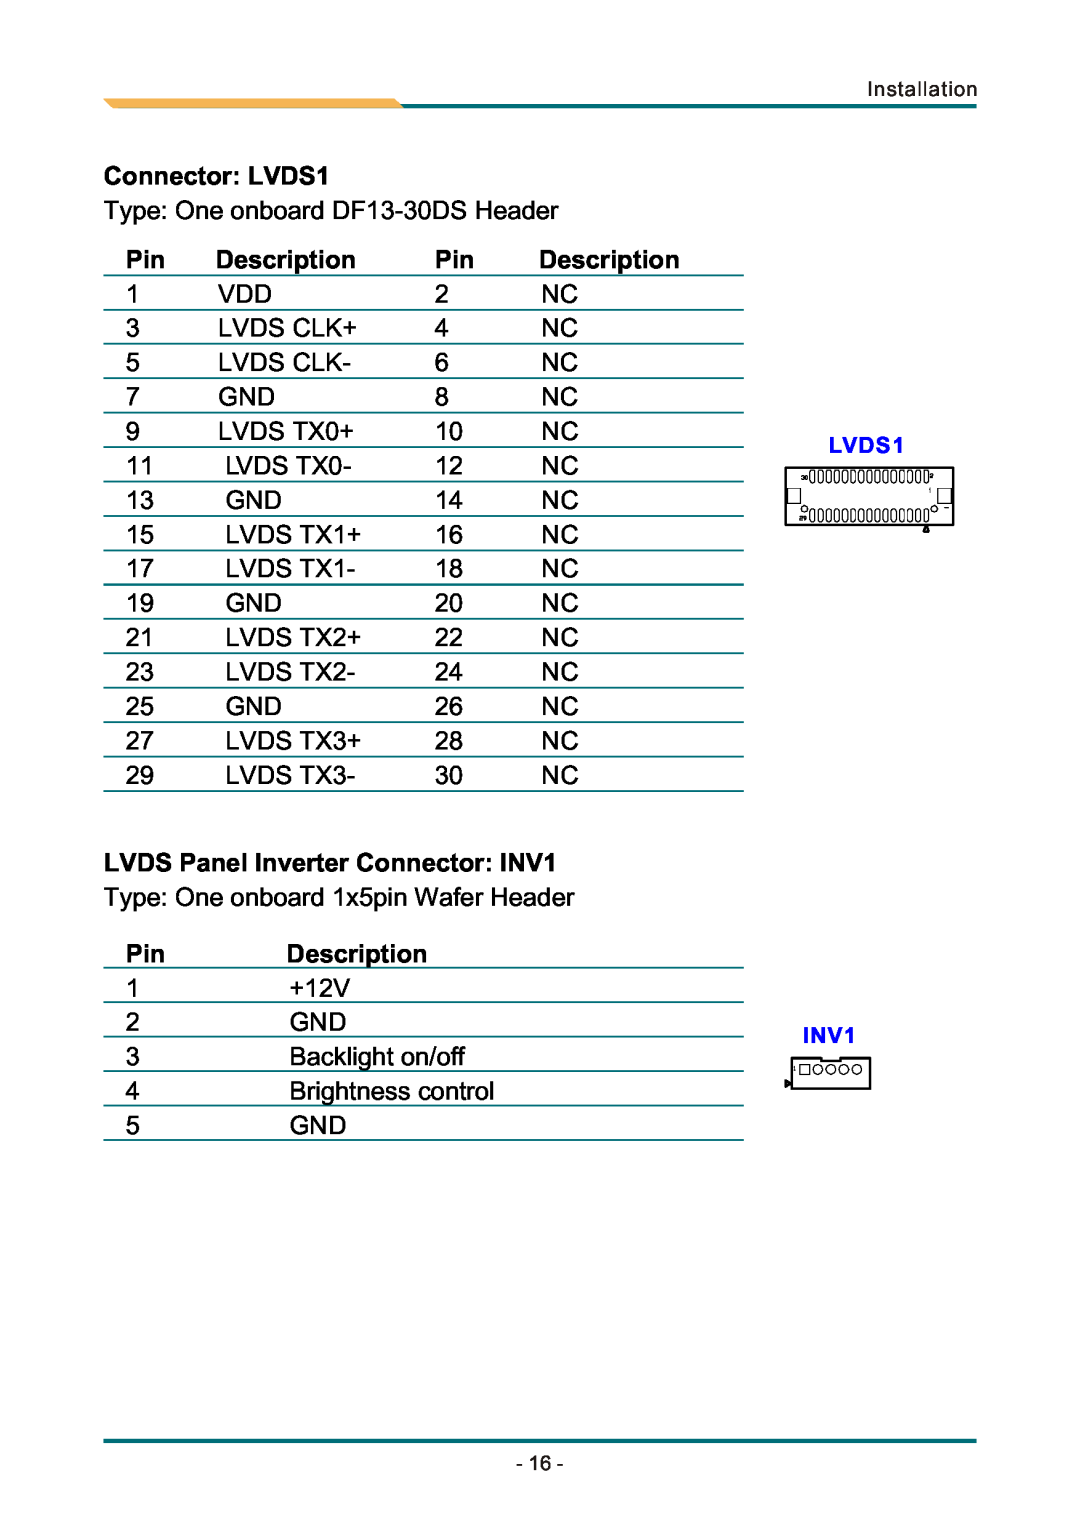 AMD SBX-5363 manual Connector LVDS1, Description, LVDS Panel Inverter Connector INV1 